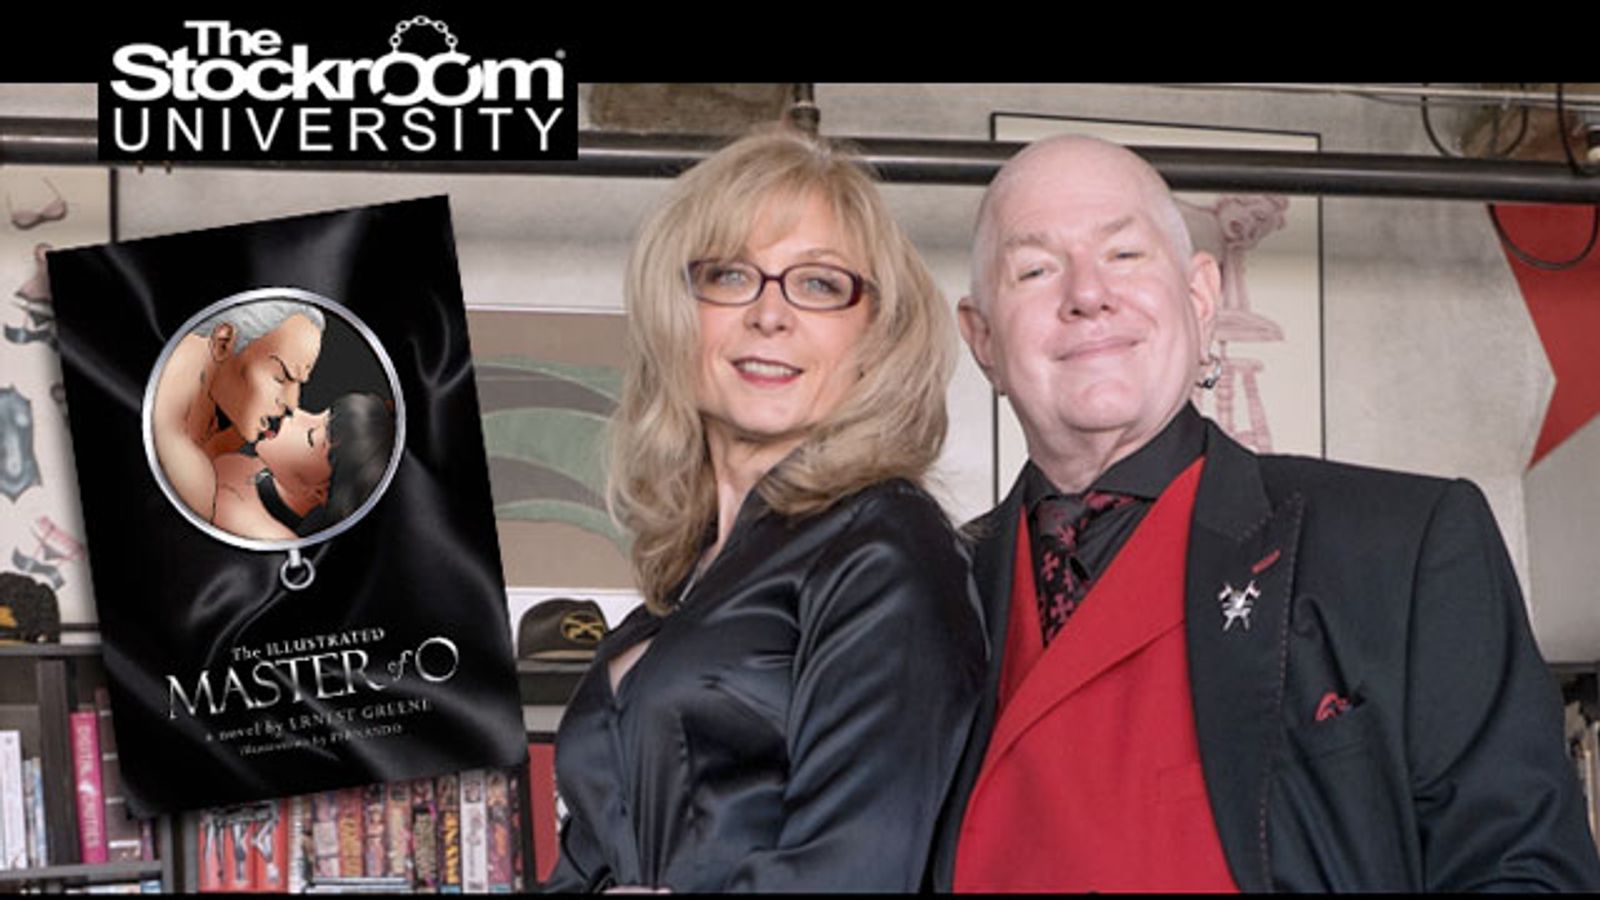 ‘Master of O ‘ Author Ernest Greene, Nina Hartley Signing March 6 At Stockroom